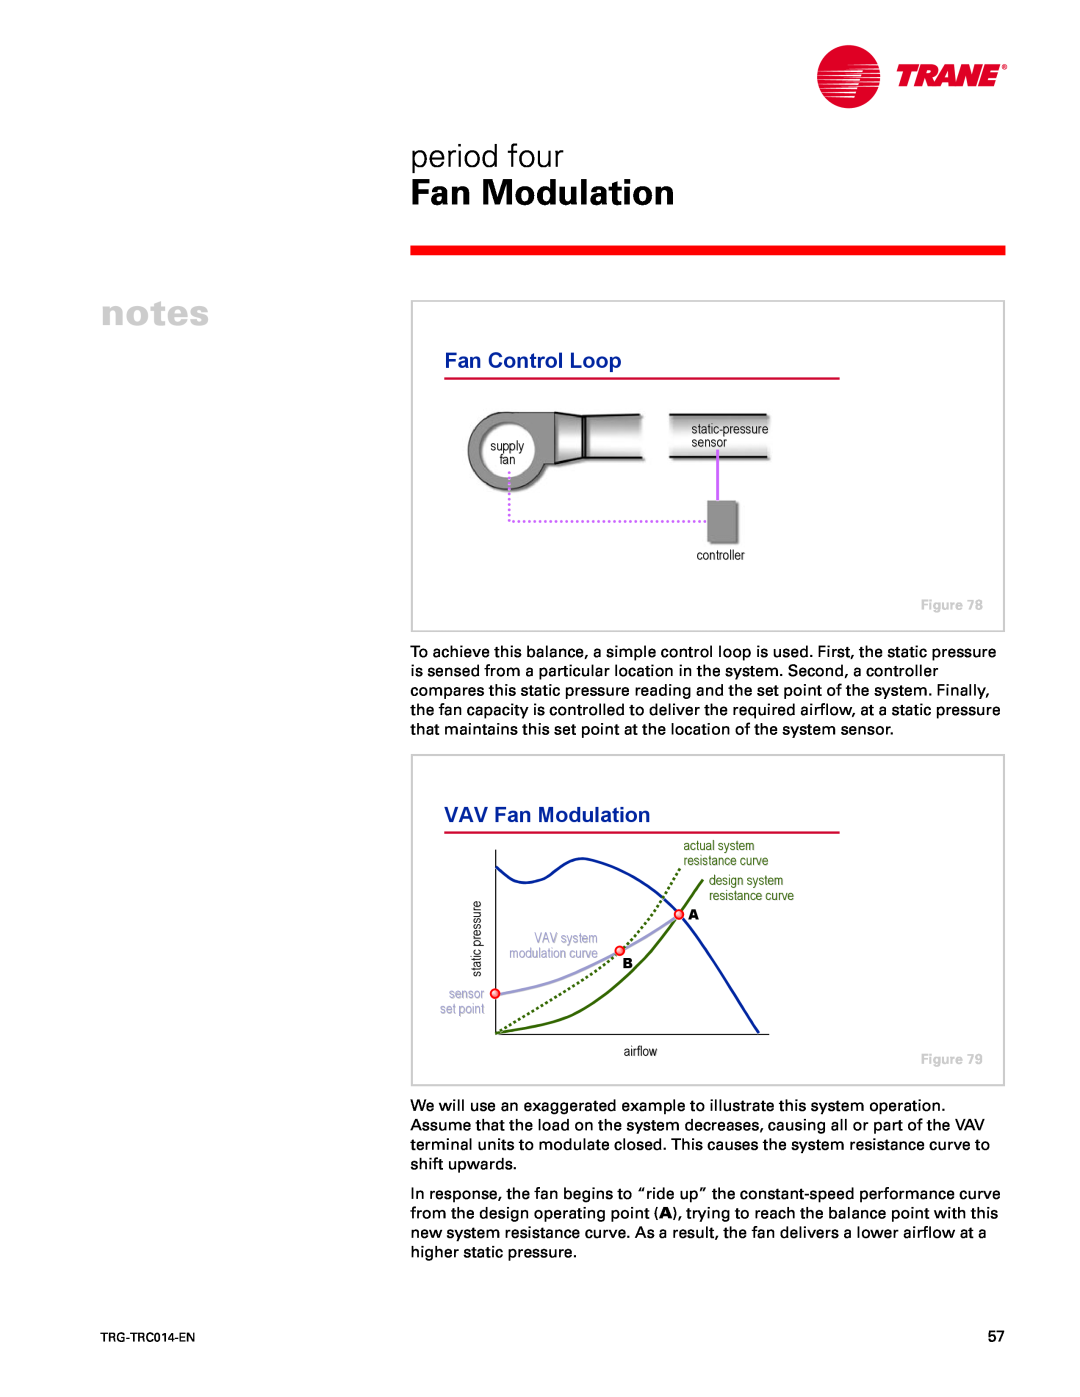 Trane TRG-TRC014-EN manual Fan Control Loop, VAV Fan Modulation, period four 